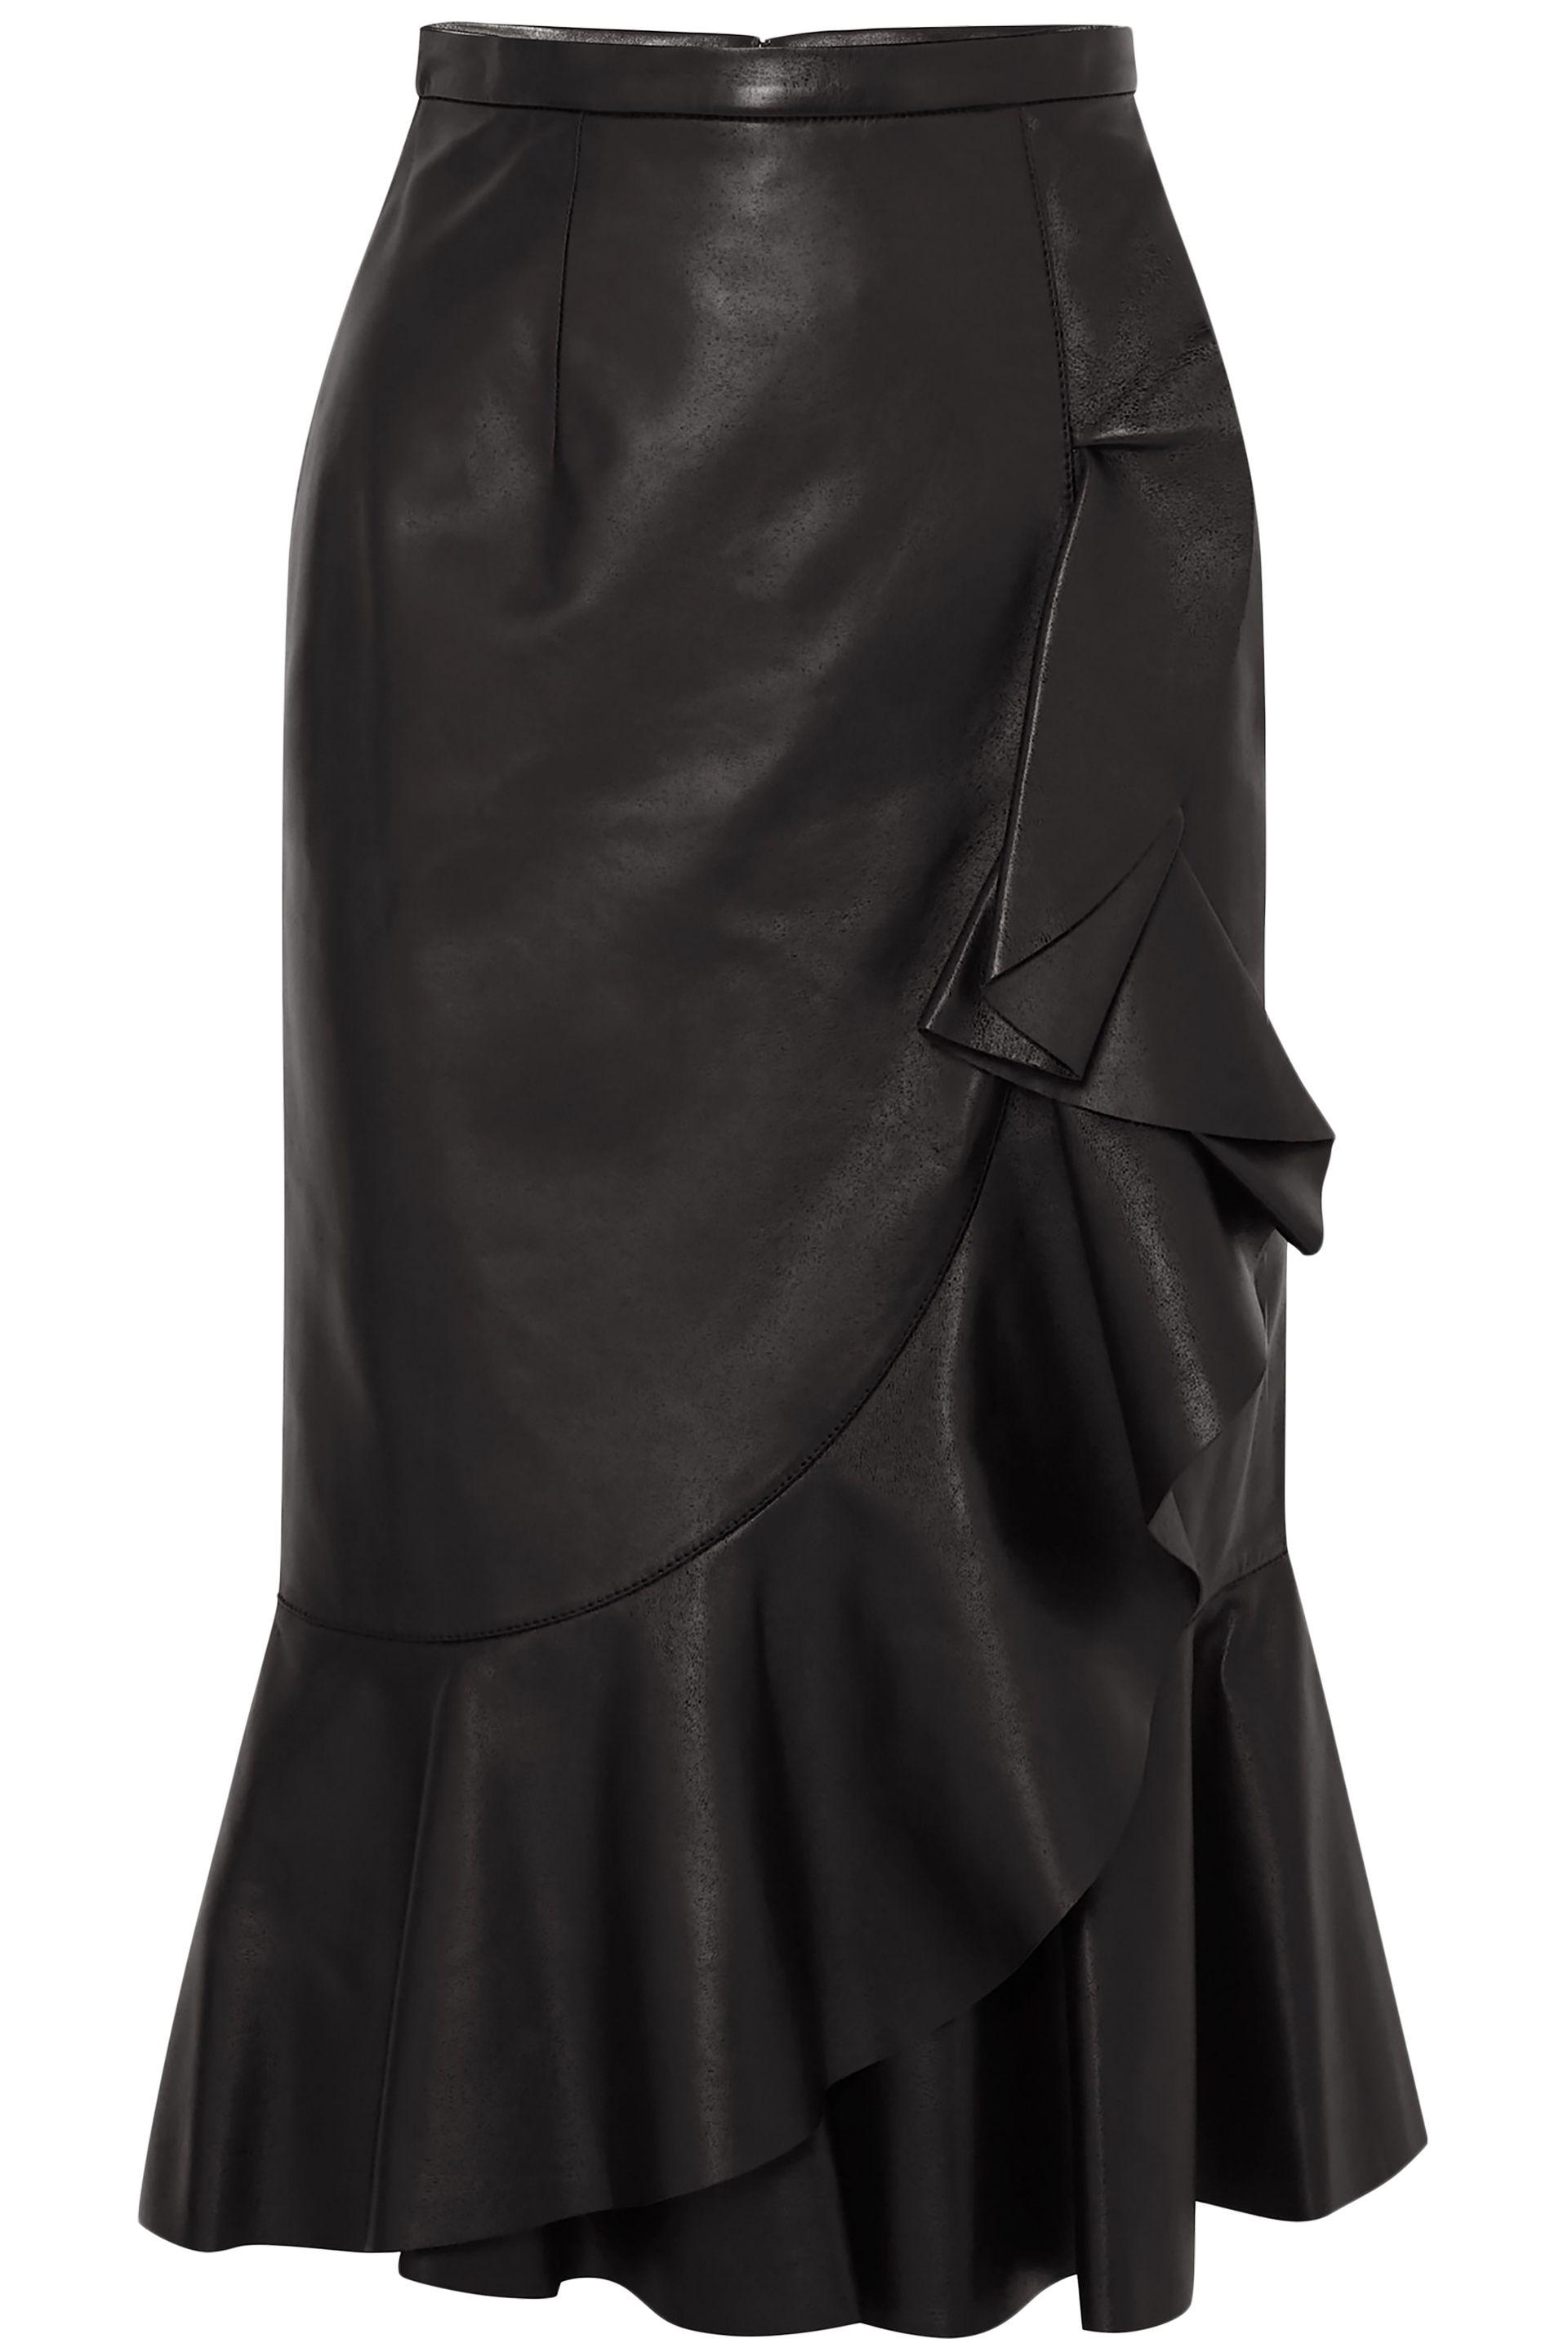 Michael Kors Rumba Wrap-effect Ruffled Leather Skirt in Black - Lyst